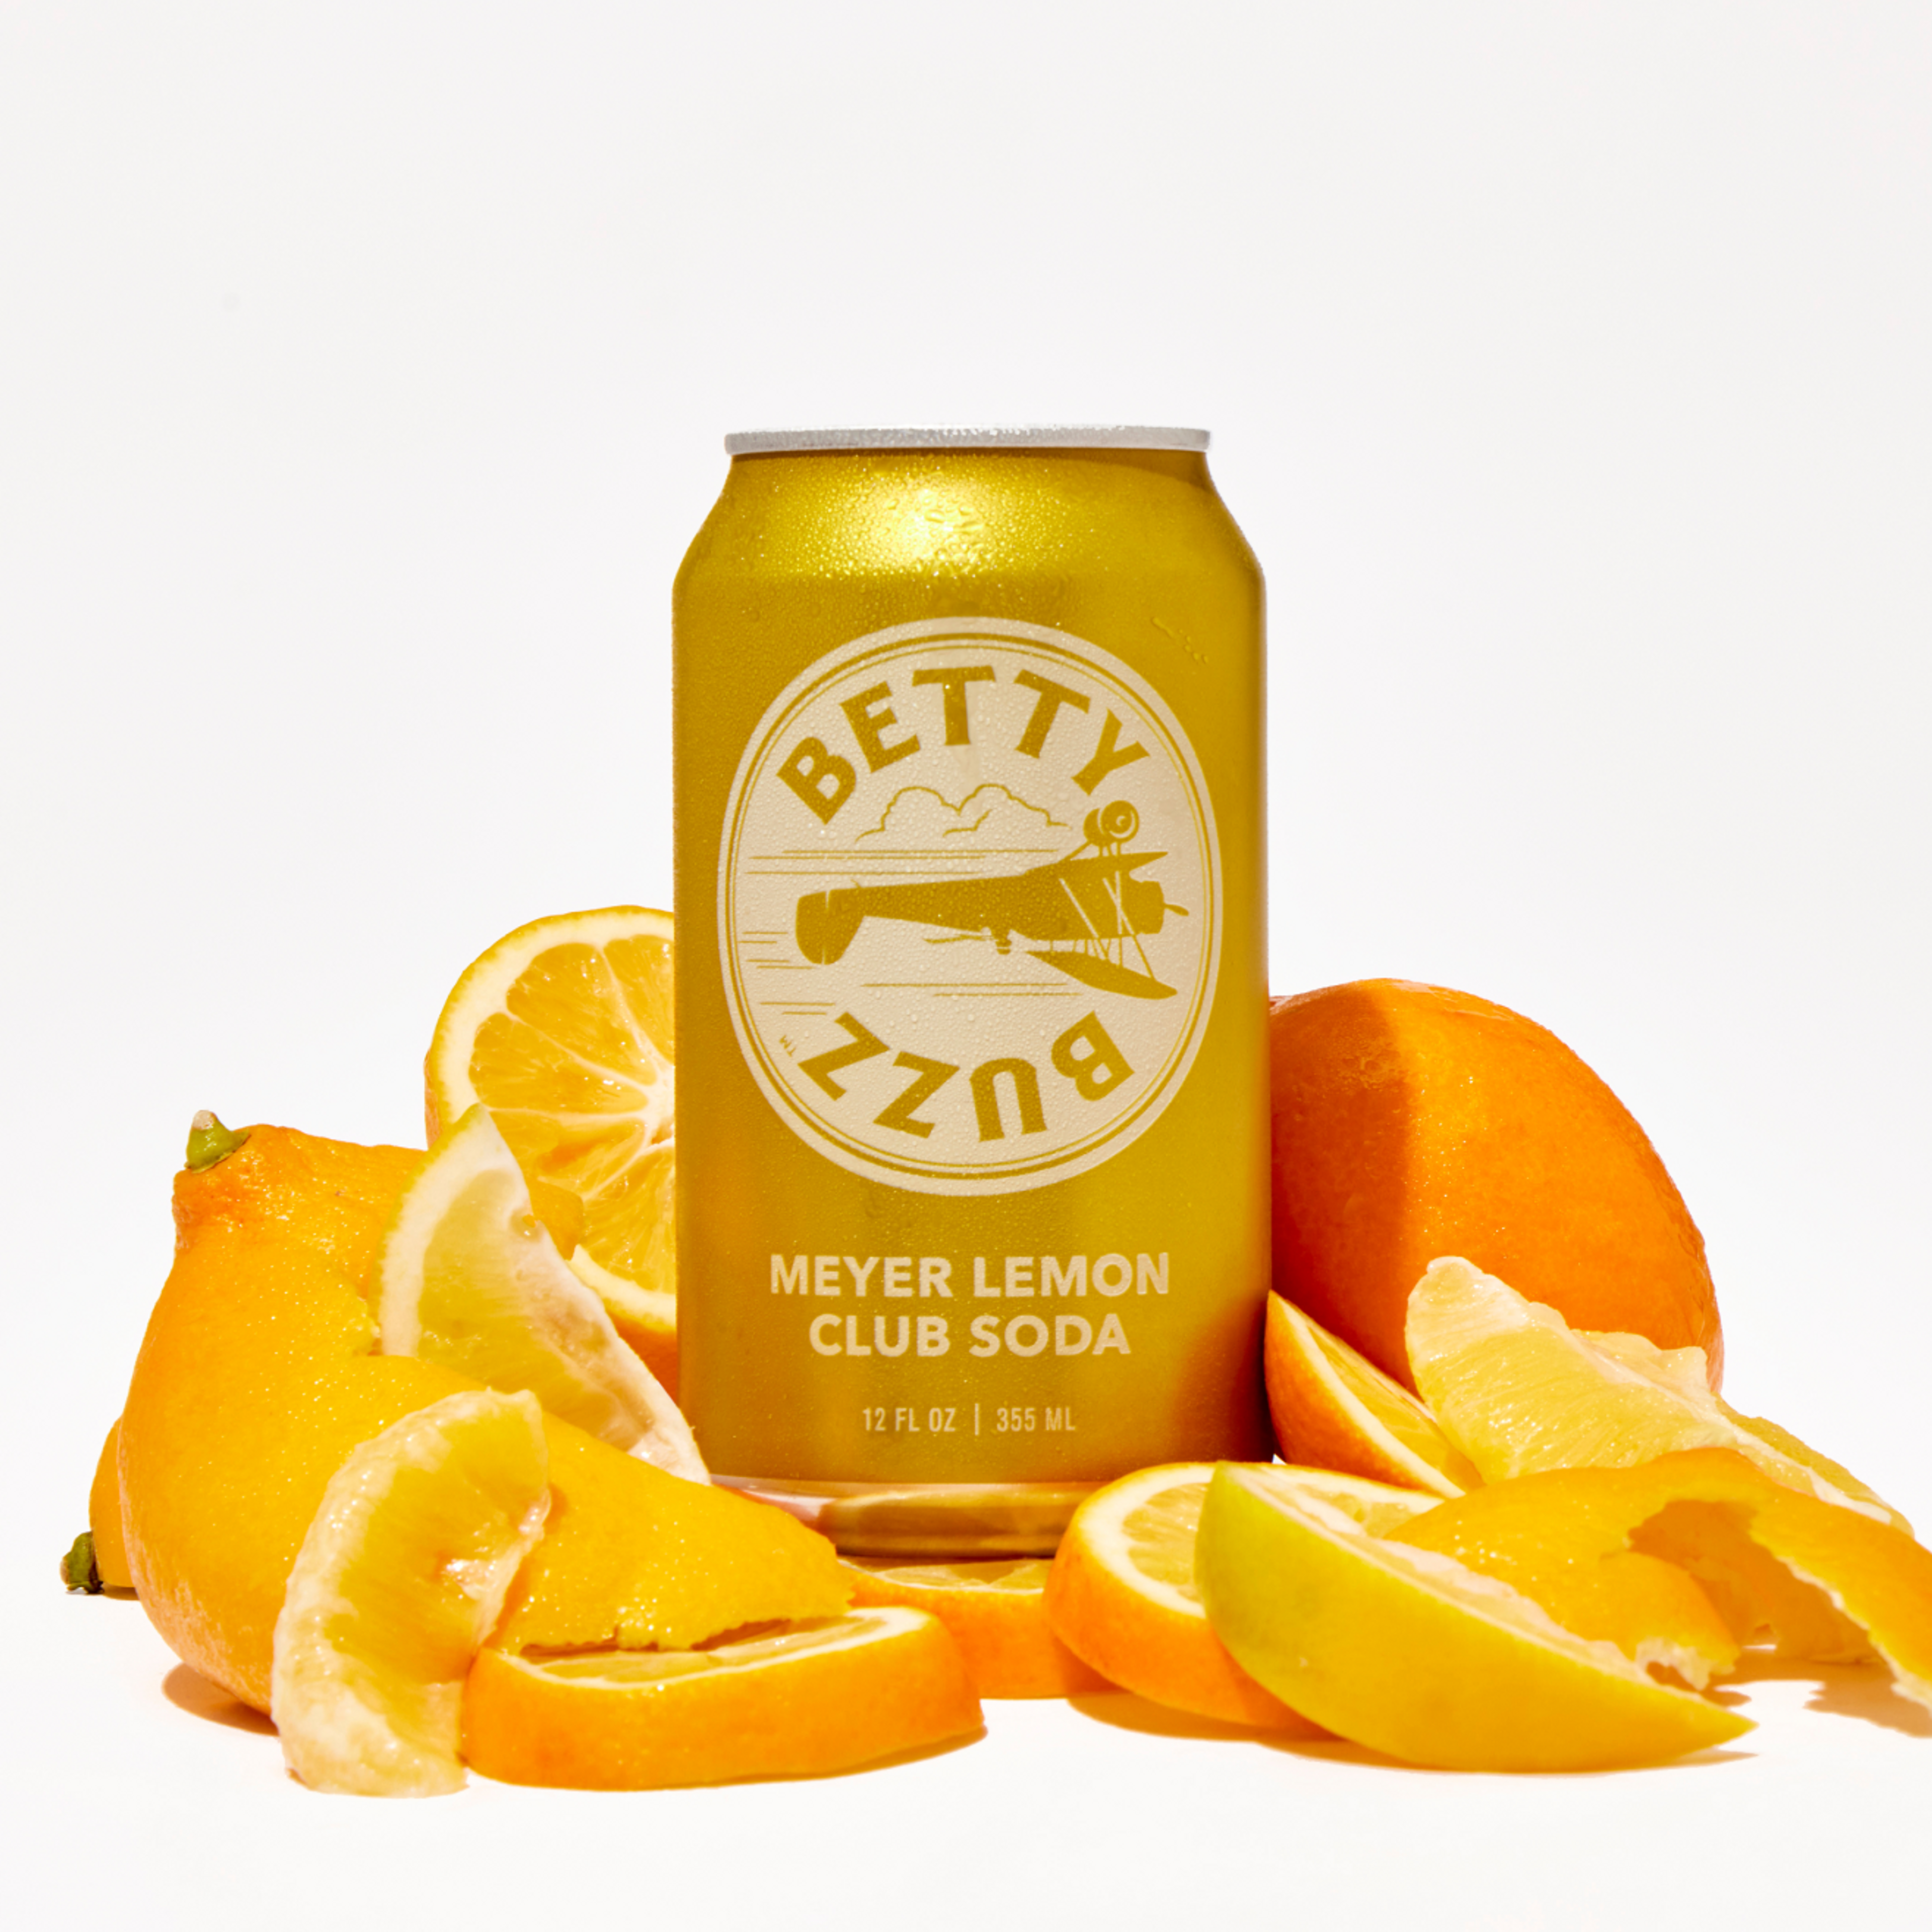 Meyer Lemon Club Soda 12⁃Pack Cans